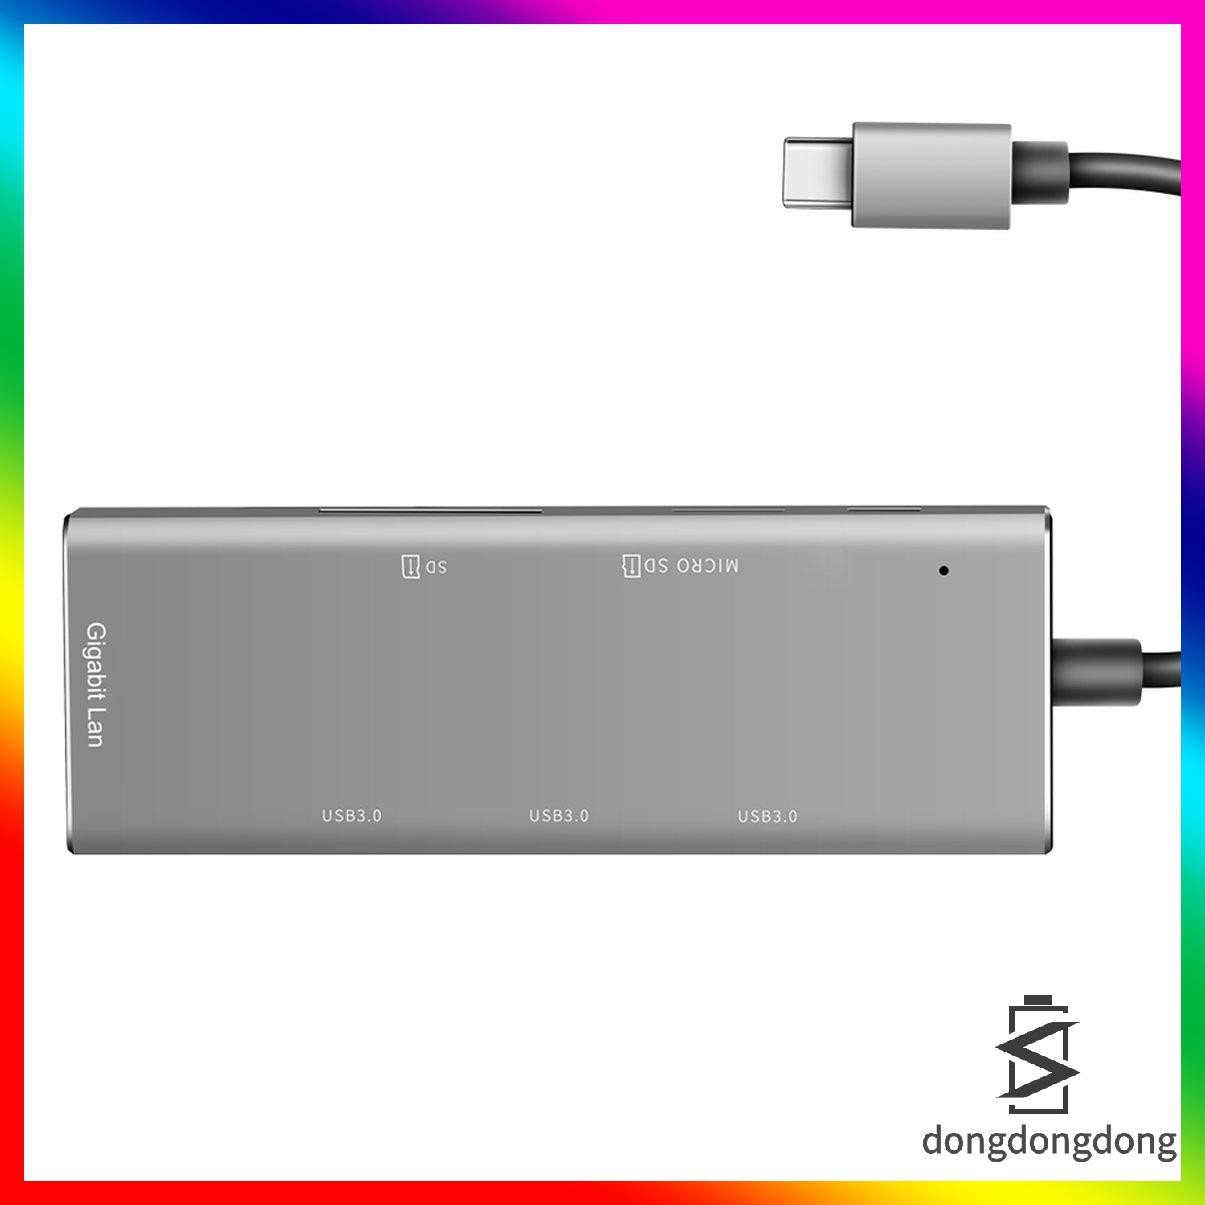 [thermometer]YC720 Multifunctional 6 in 1 USB Hub Type C to USB 3.0 RJ45 Gigabit Adapter